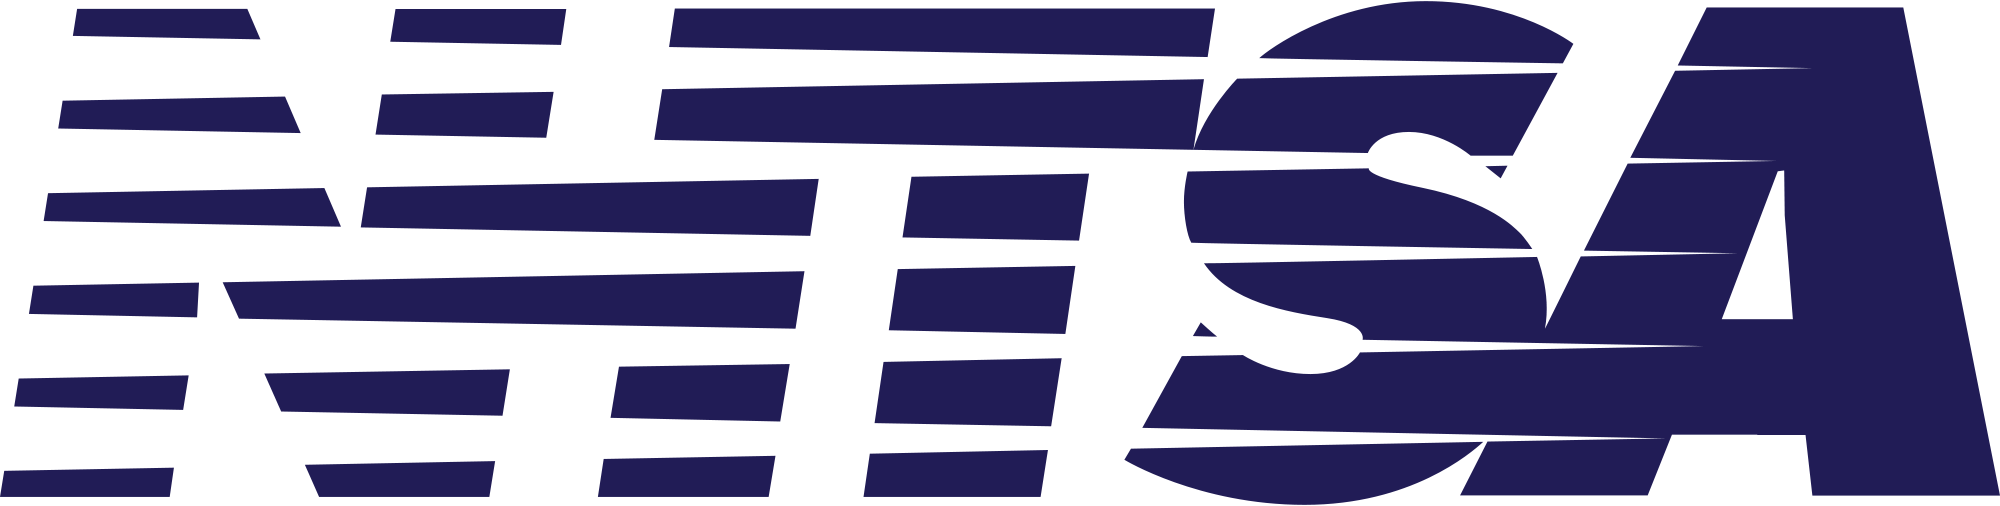 NHTSA Logo - File:US-NHTSA-1990sLogo.svg - Wikimedia Commons